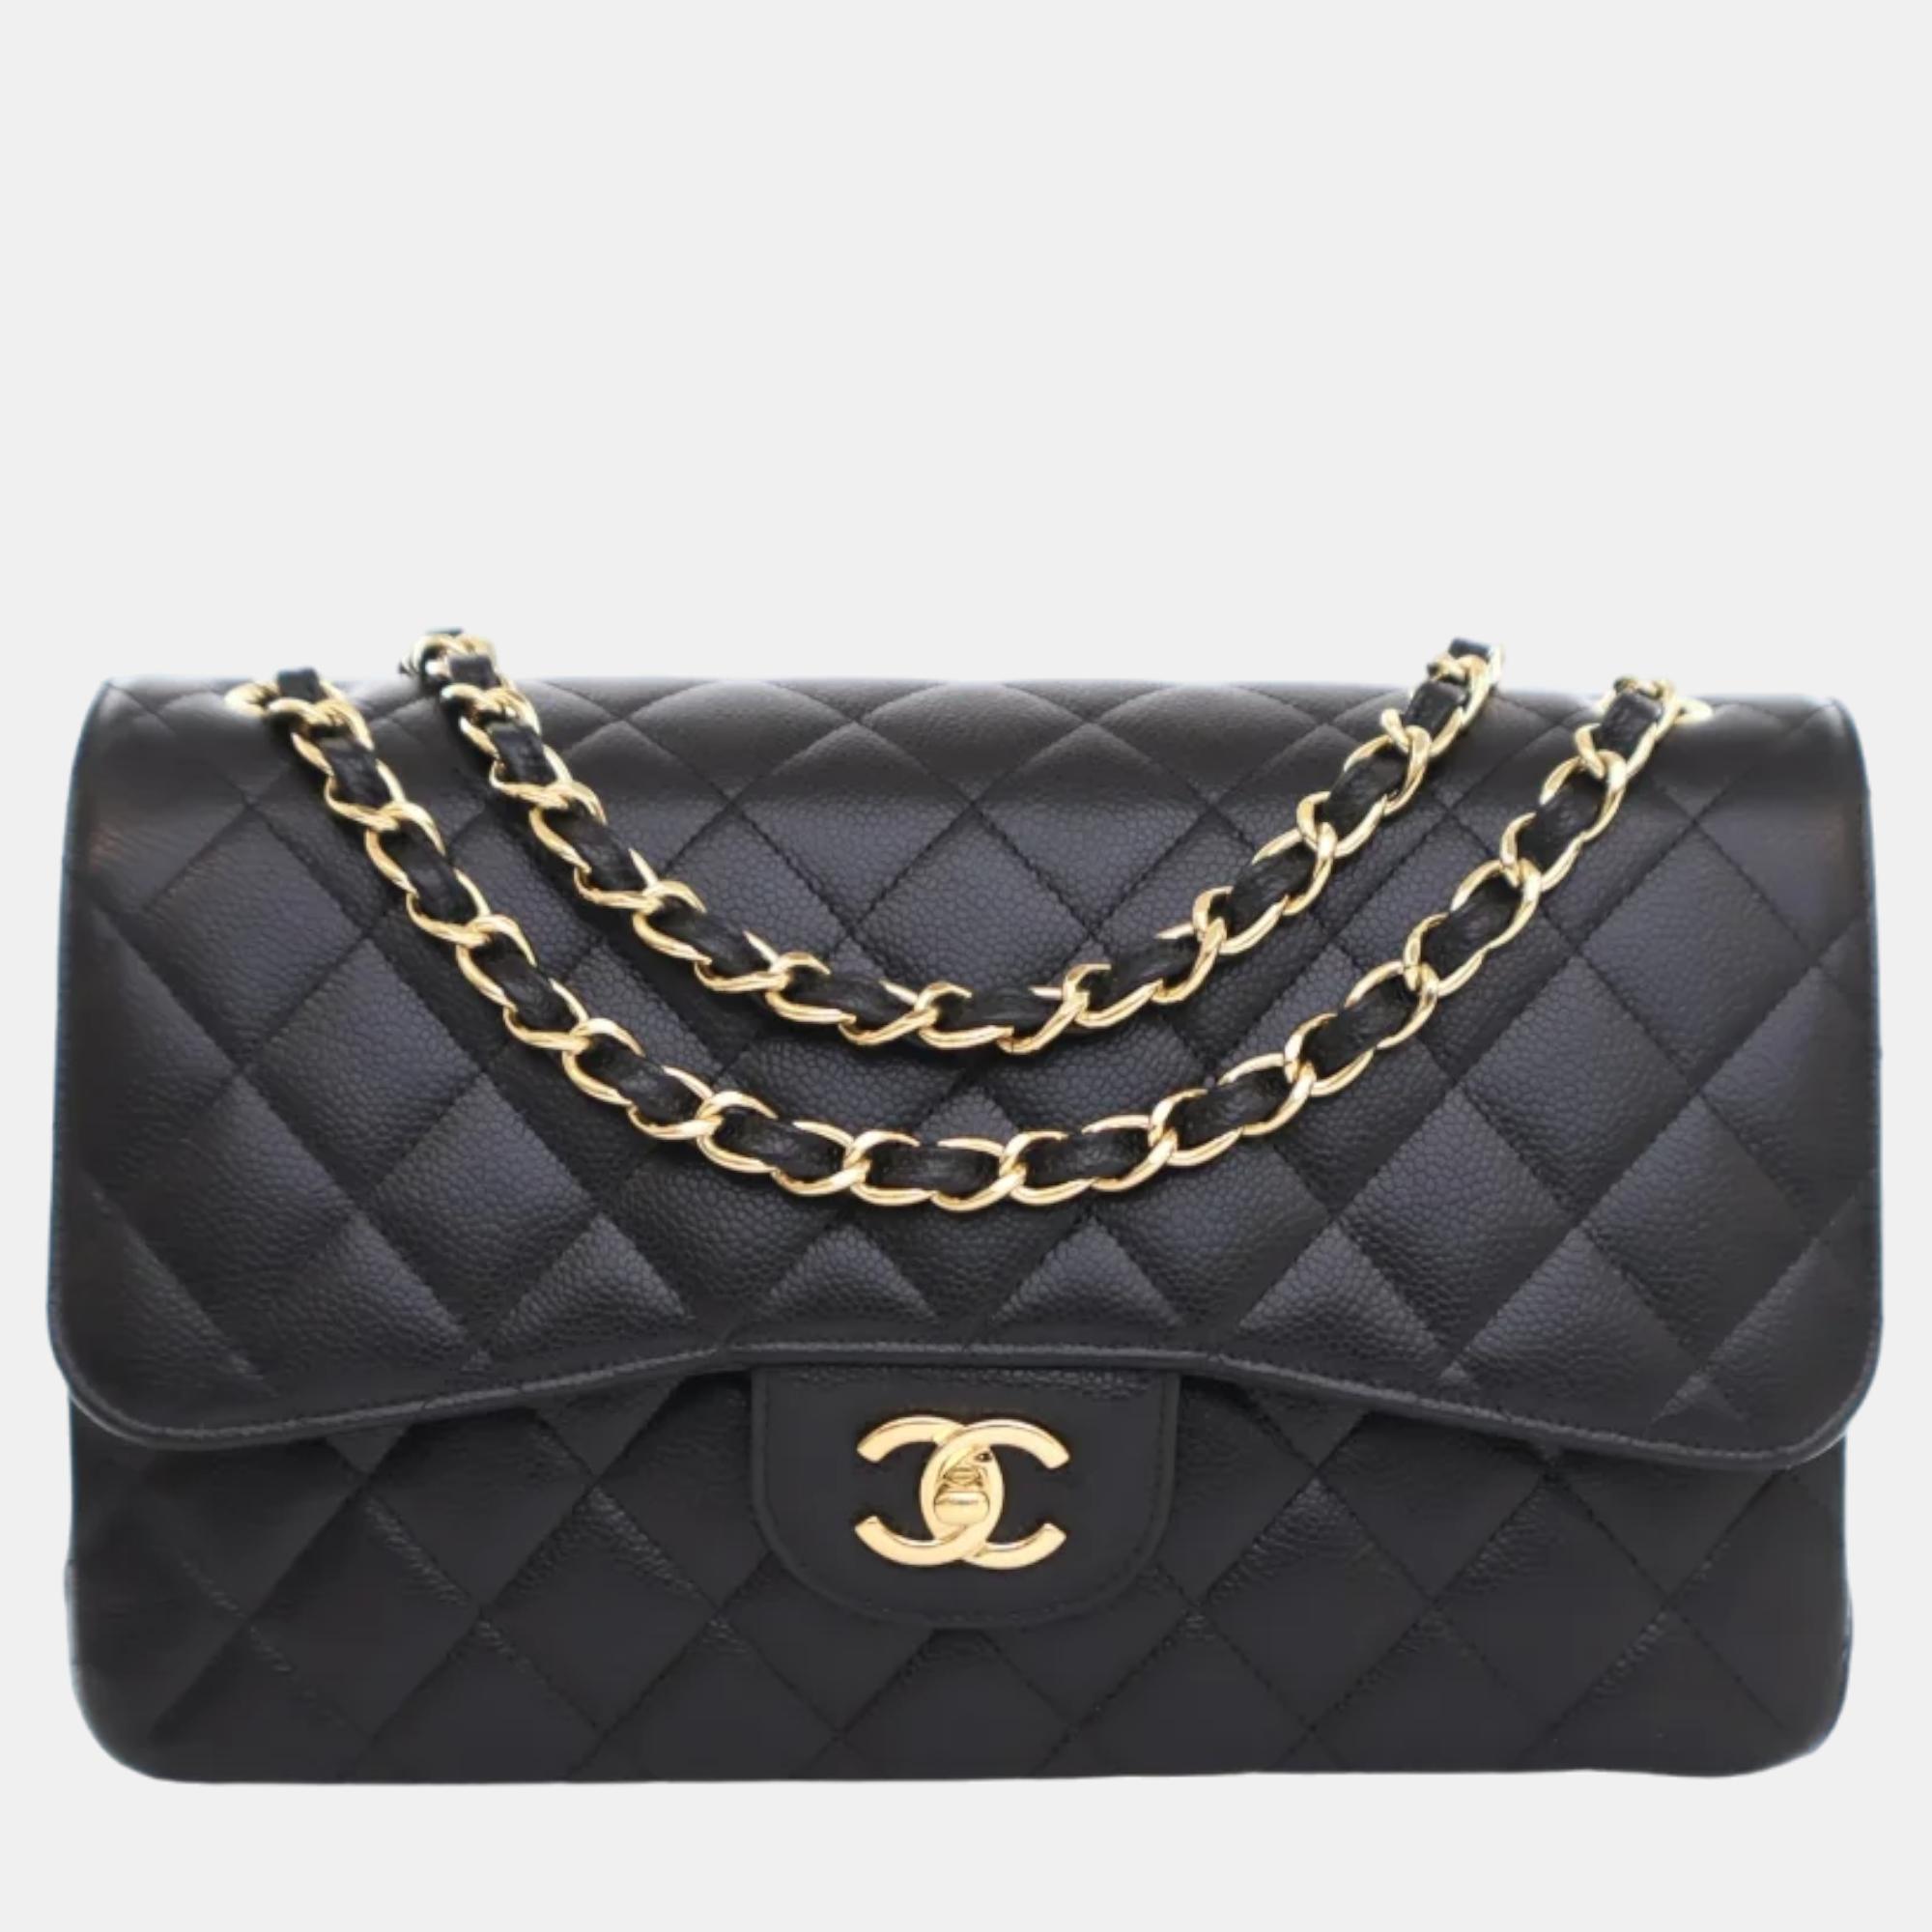 Chanel black leather jumbo classic double flap shoulder bag